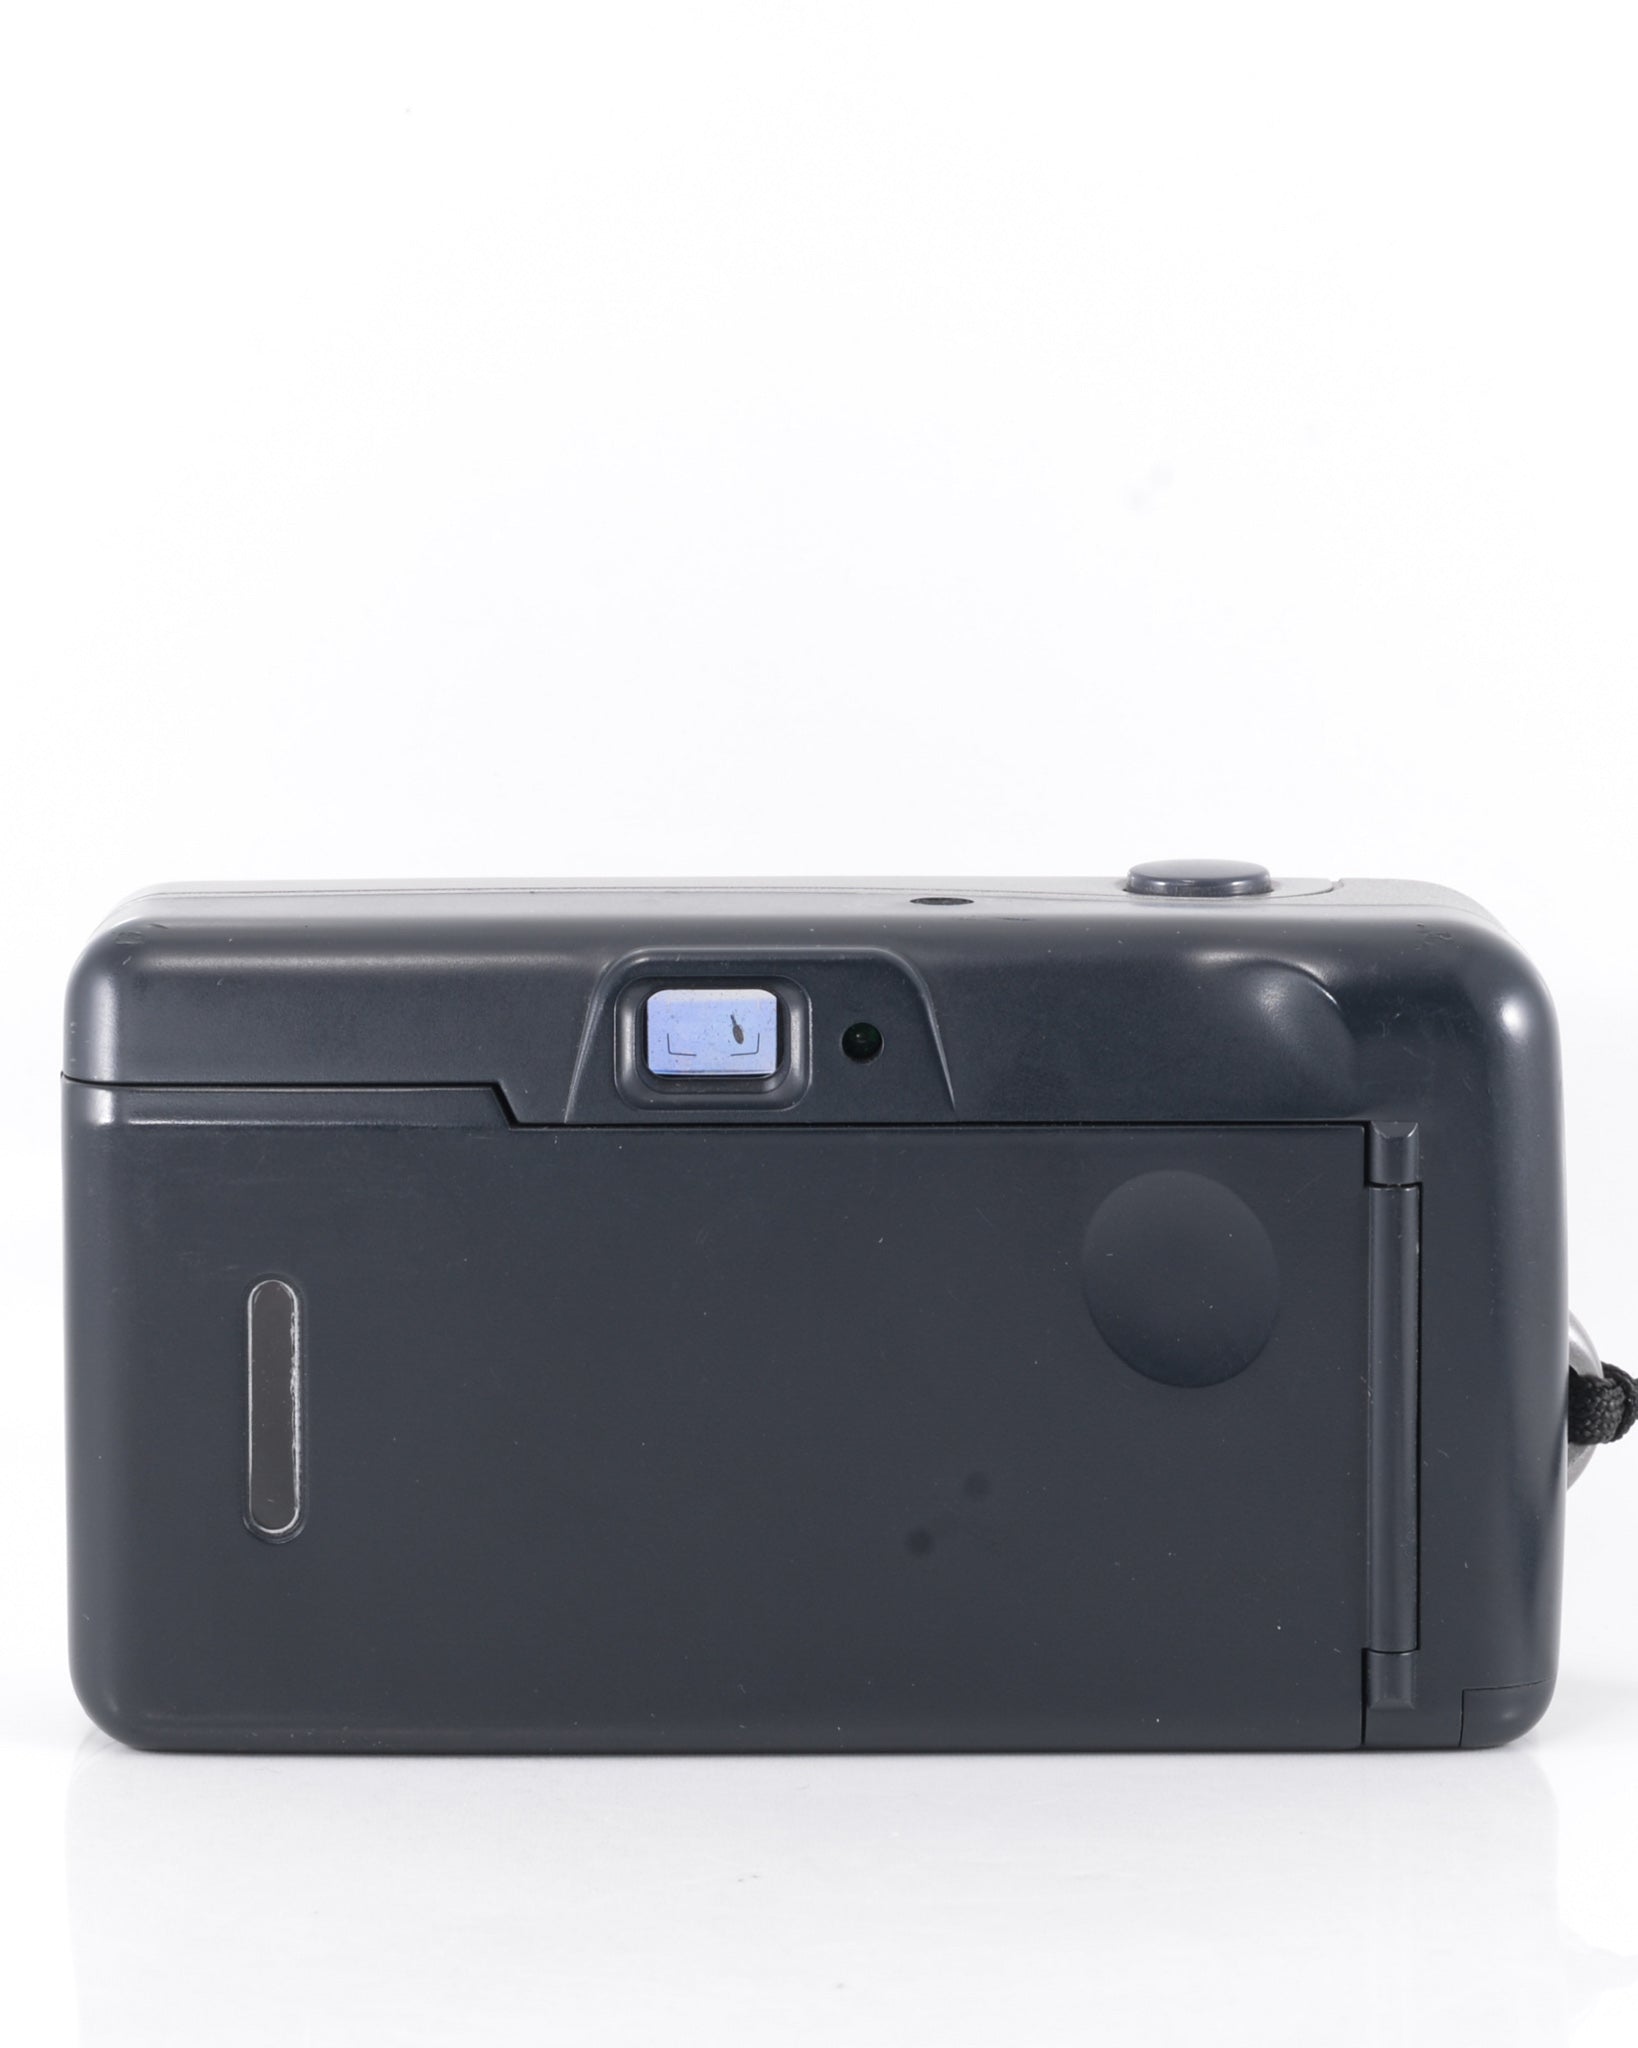 Nikon EF300 35mm point & shoot film camera with 29mm f4.5 lens